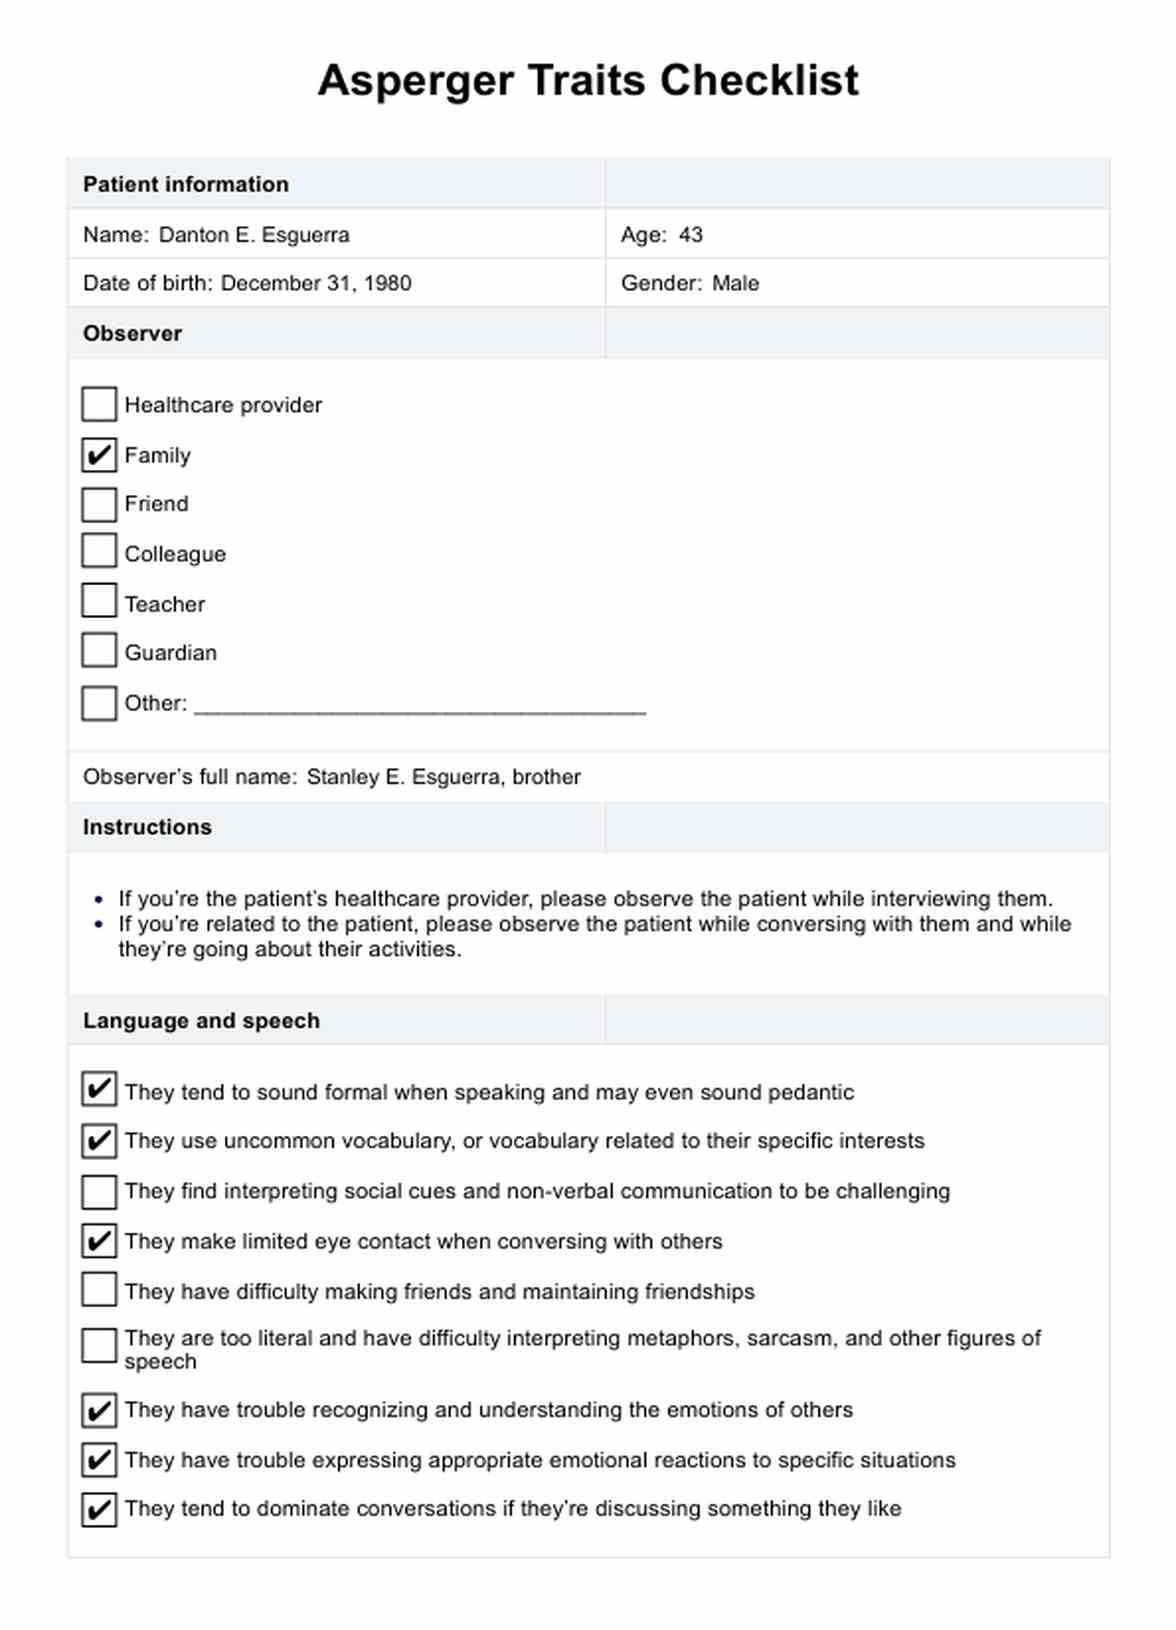 Asperger Traits Checklist PDF Example